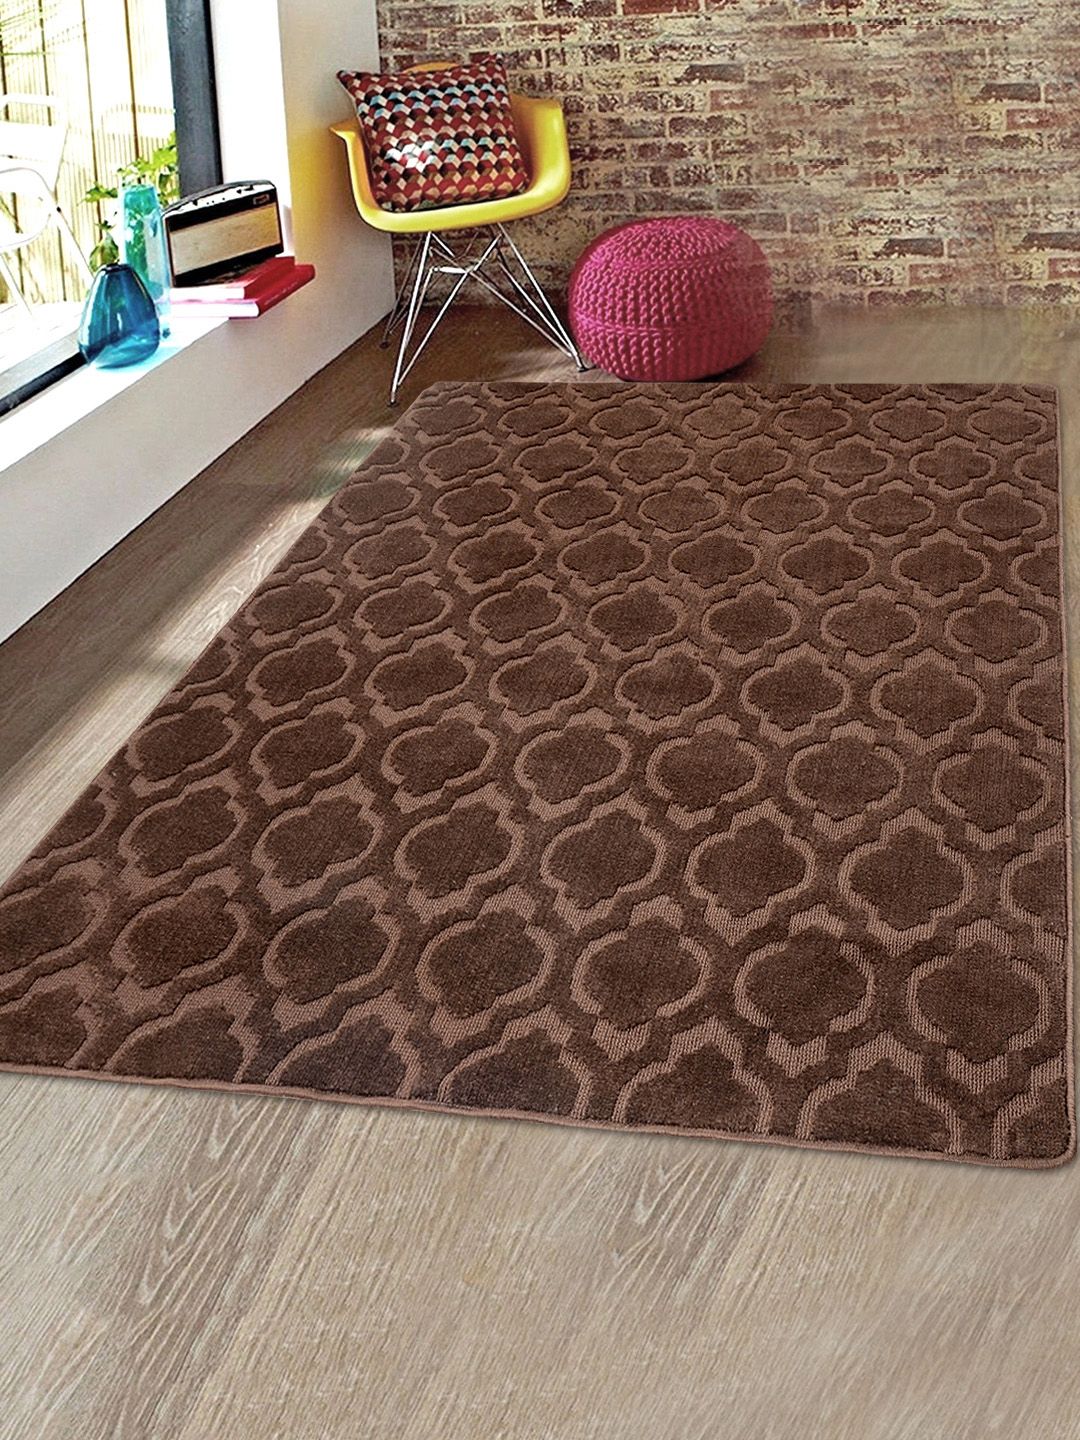 Saral Home Brown Solid Microfiber Anti-Skid Carpet Price in India